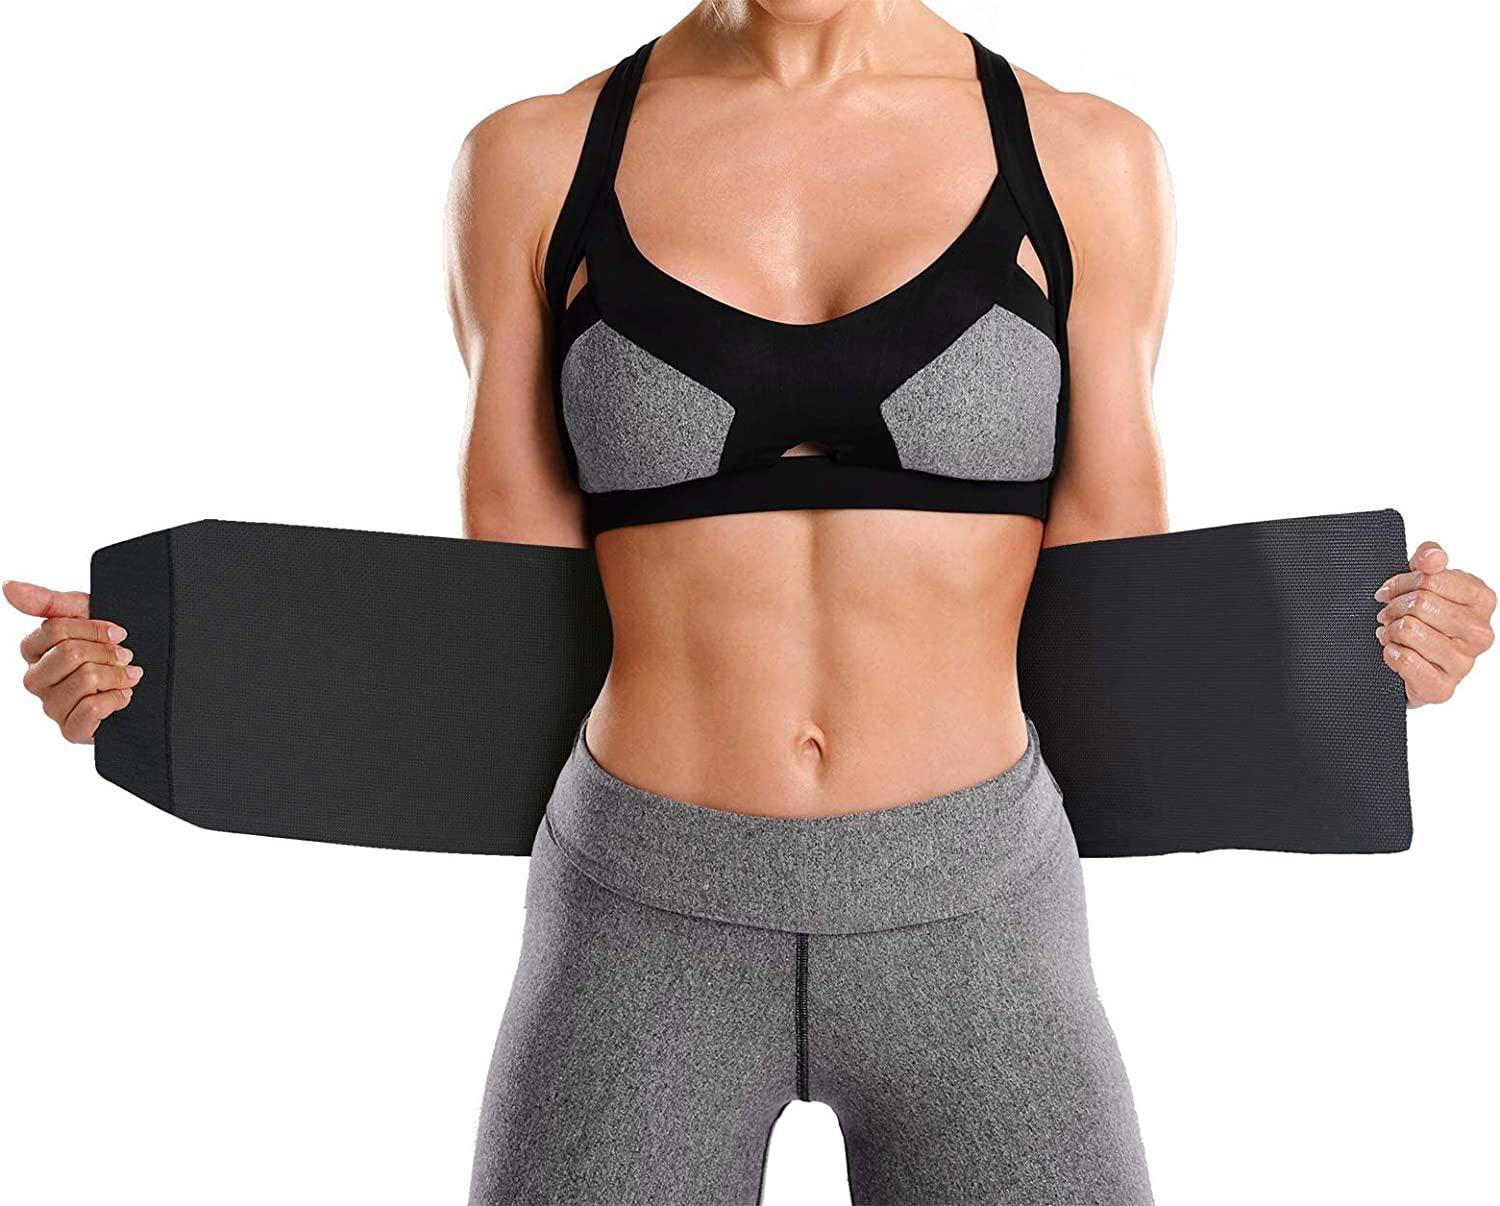 Gym Waist Trimmer - Sweat Band Waist Trainer Belt for Men and Women -  Reinforced Trim Adjustable Stomach Trainer & Back Support - AliExpress